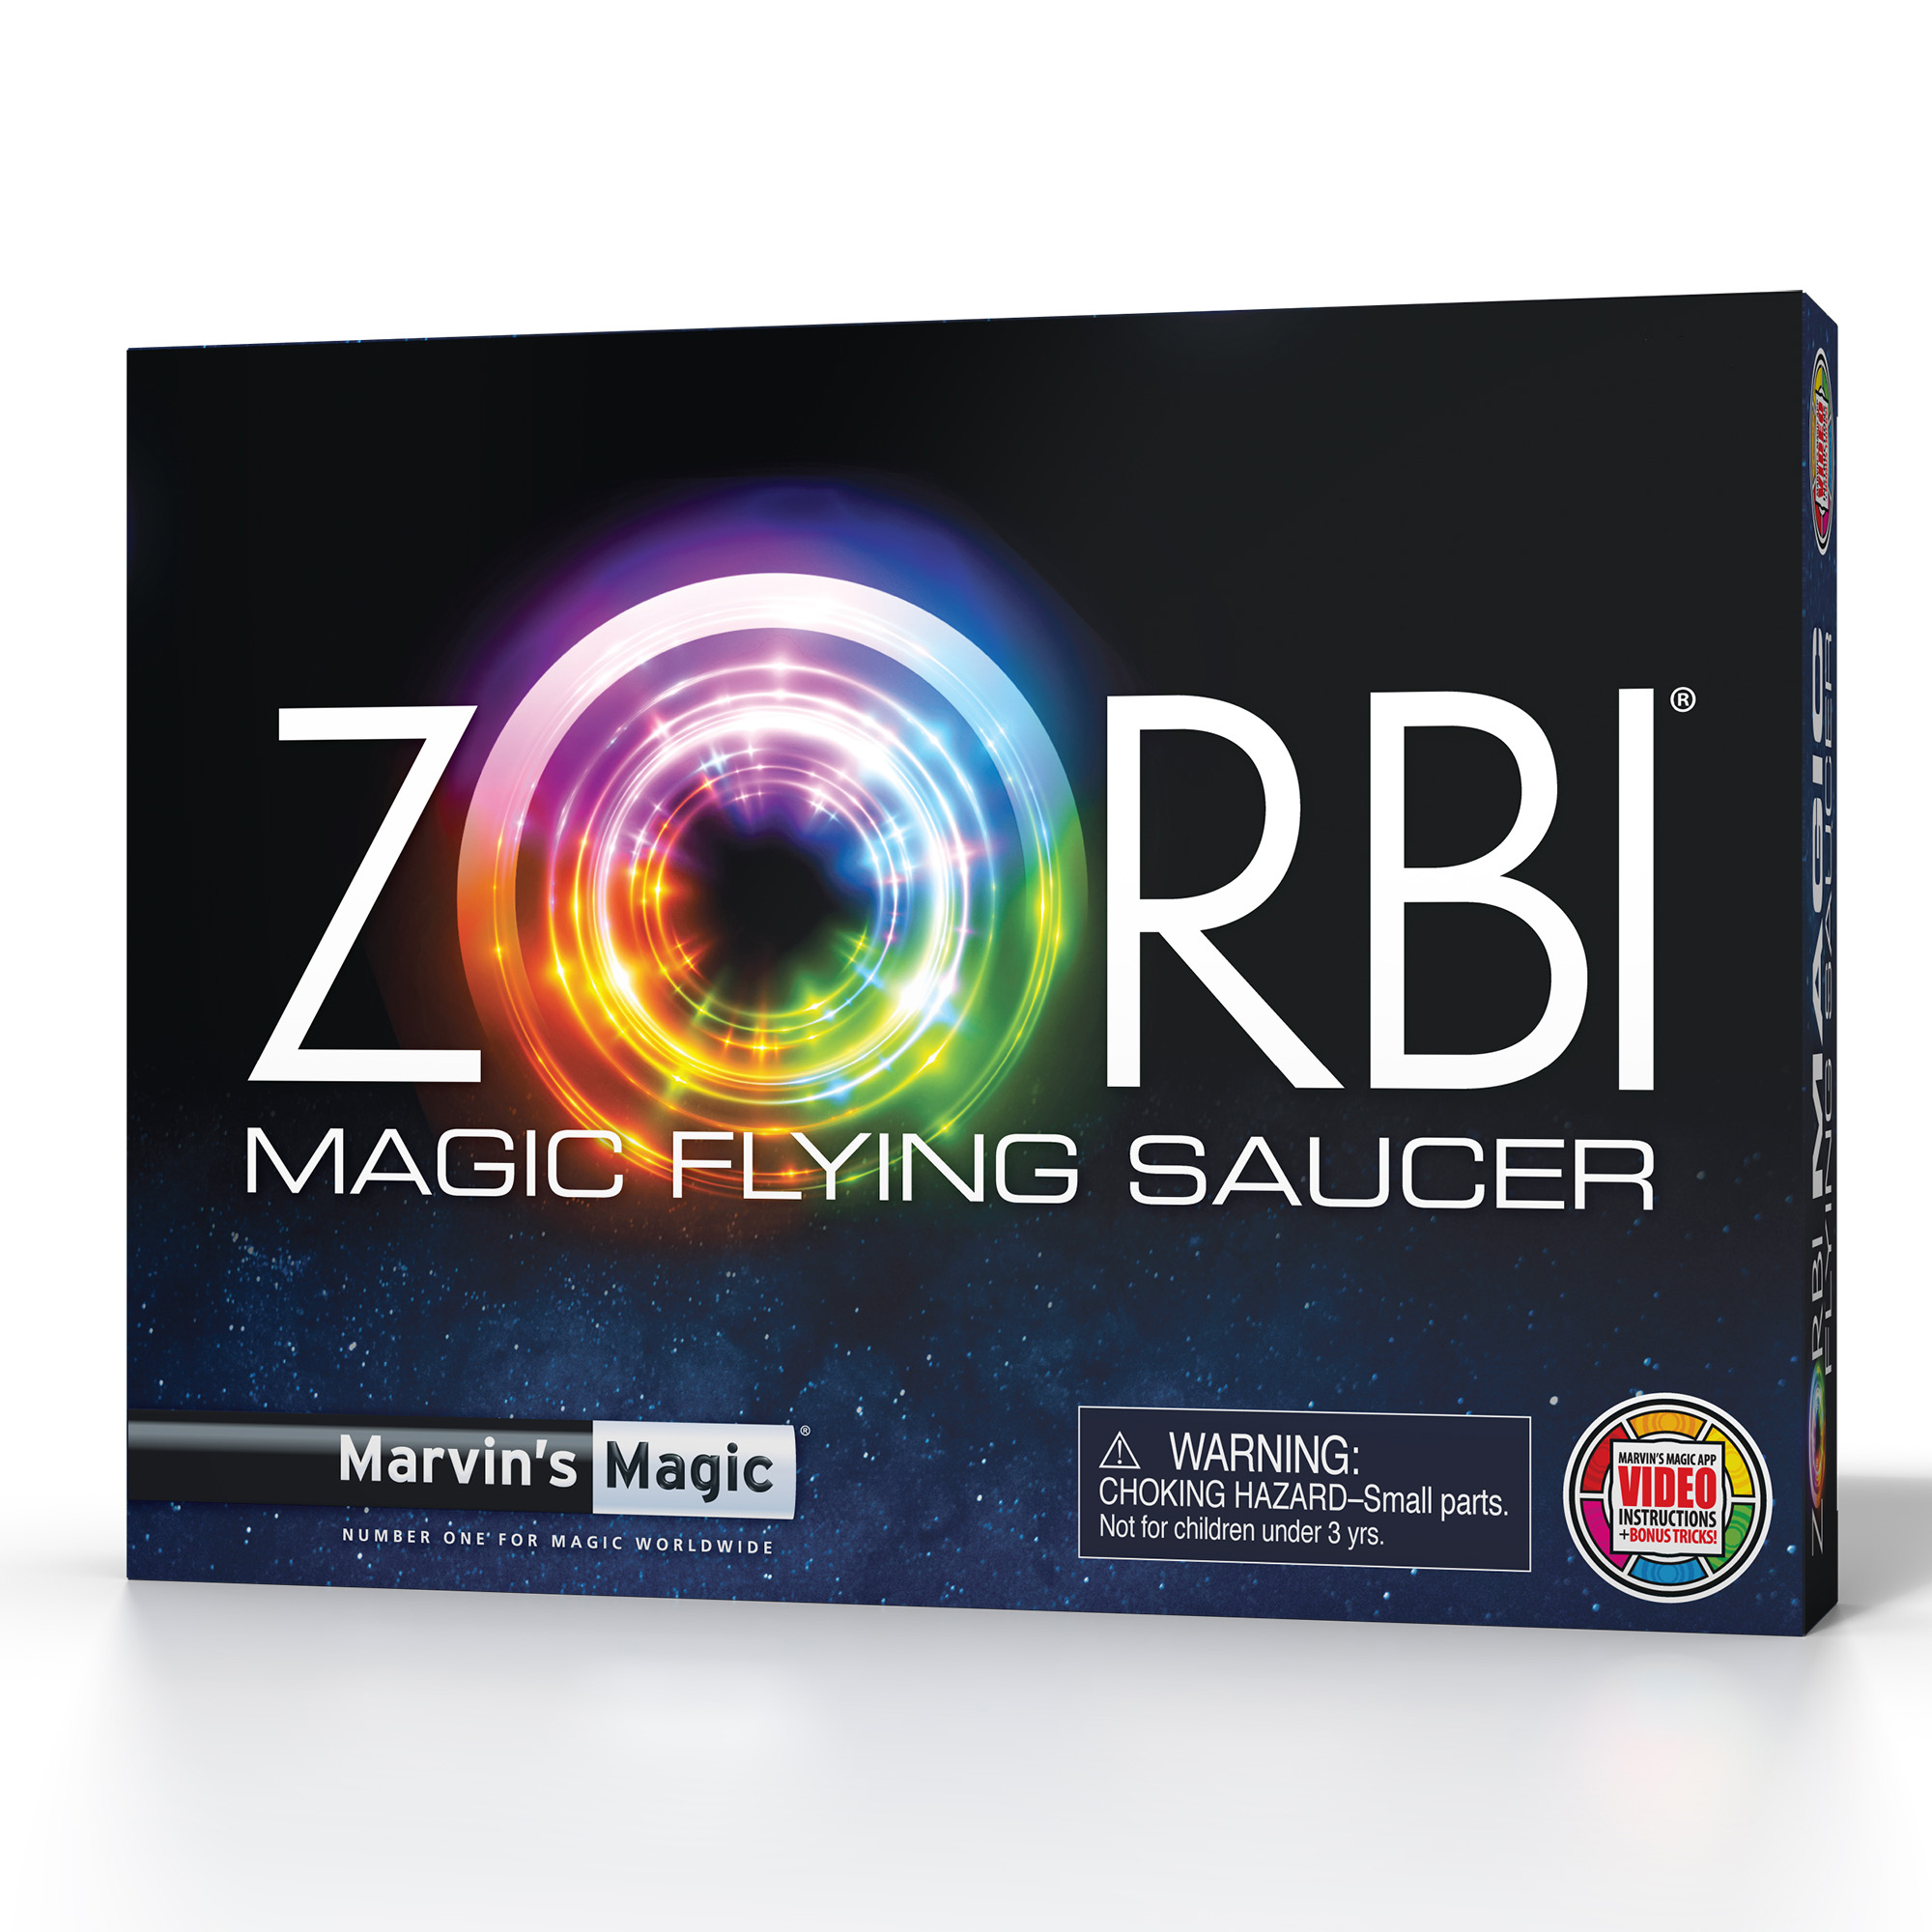 Disco volante magico zorbi magic flying saucer - Marvin's Magic